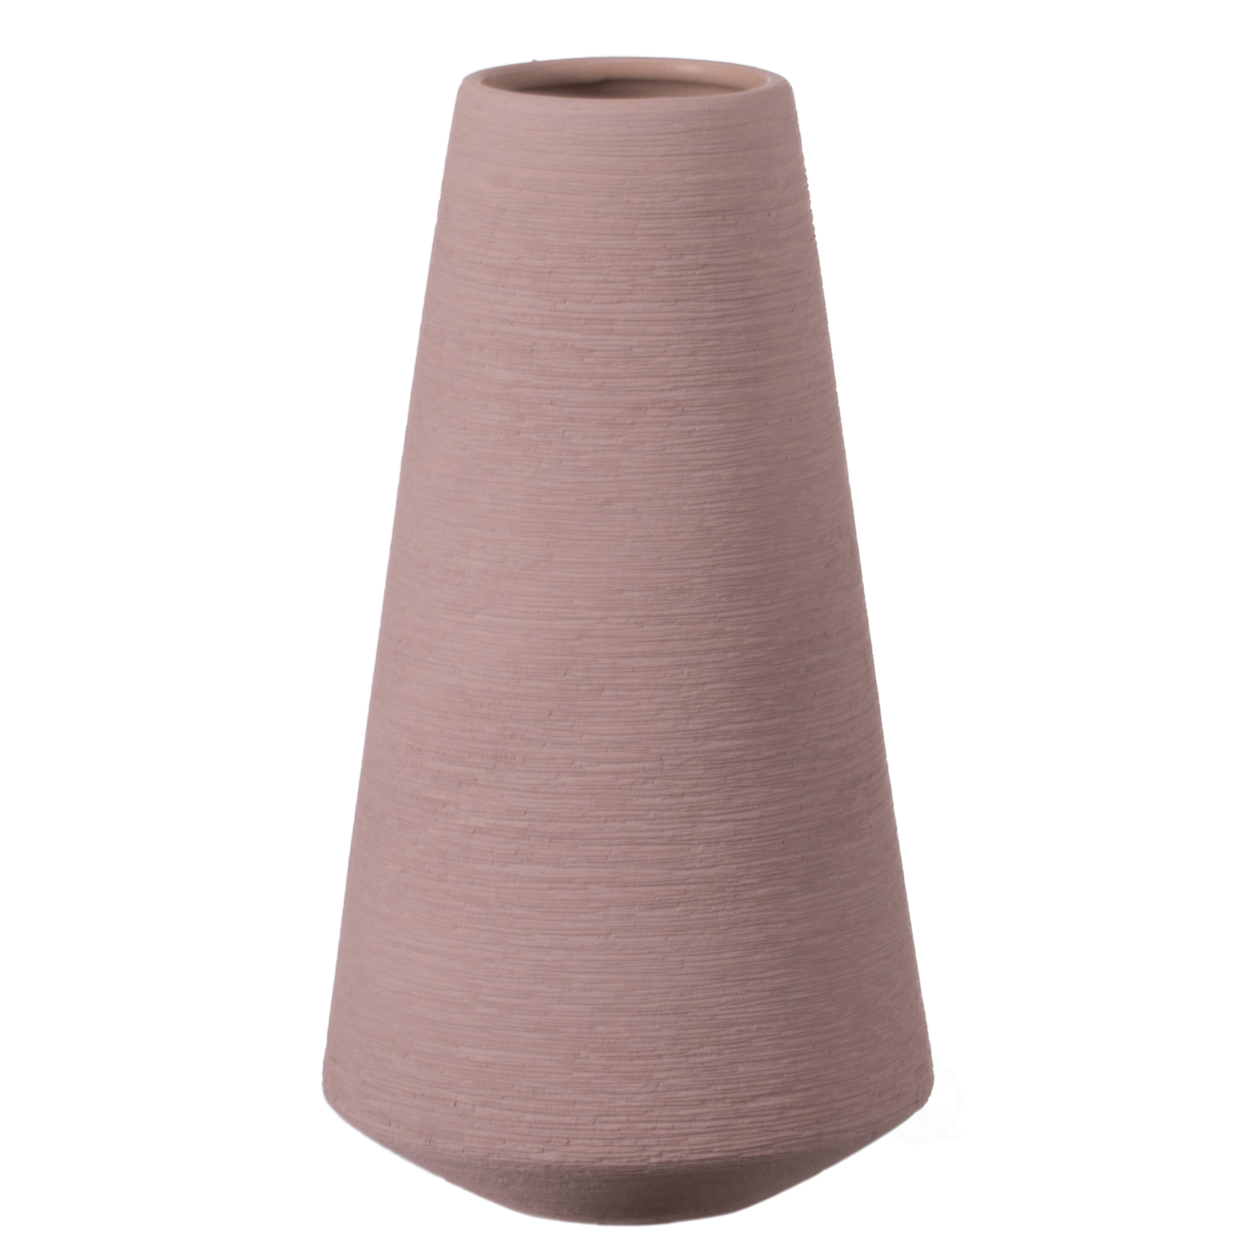 Decorative Ceramic Round Cone Shape Centerpiece Table Vase - Multi